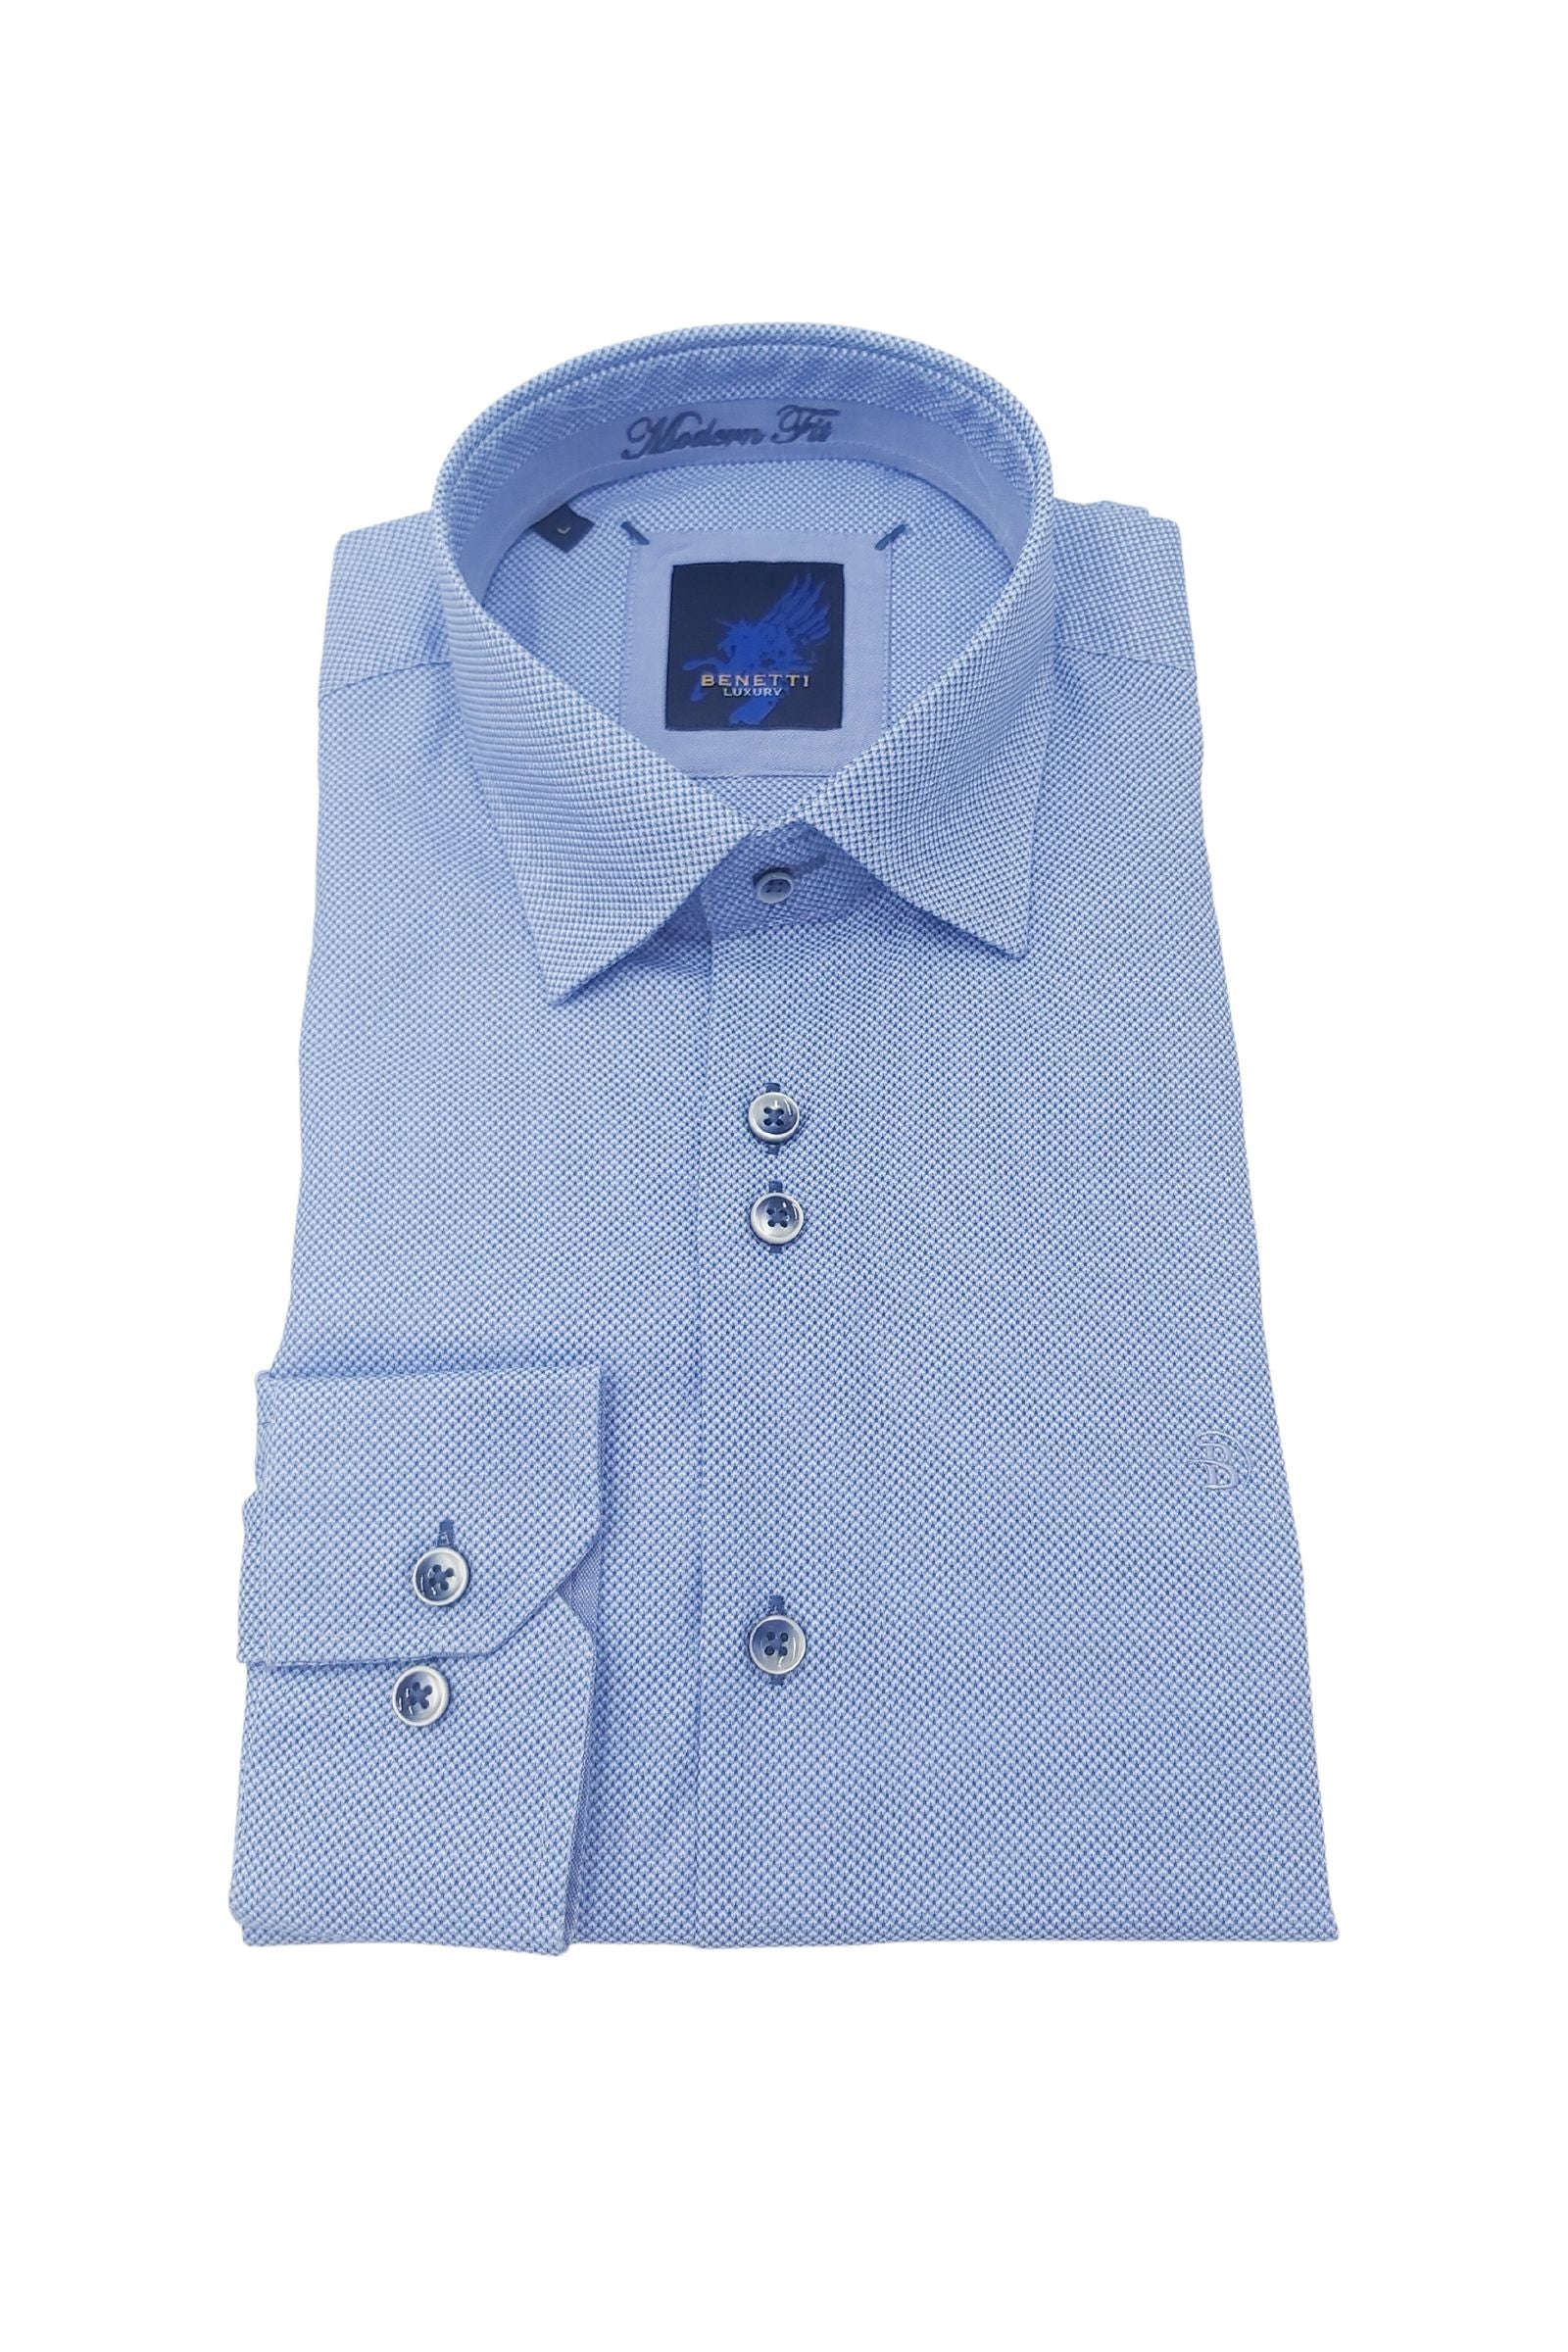 Men's Yang Long Sleeve Shirt - Blue-Front View